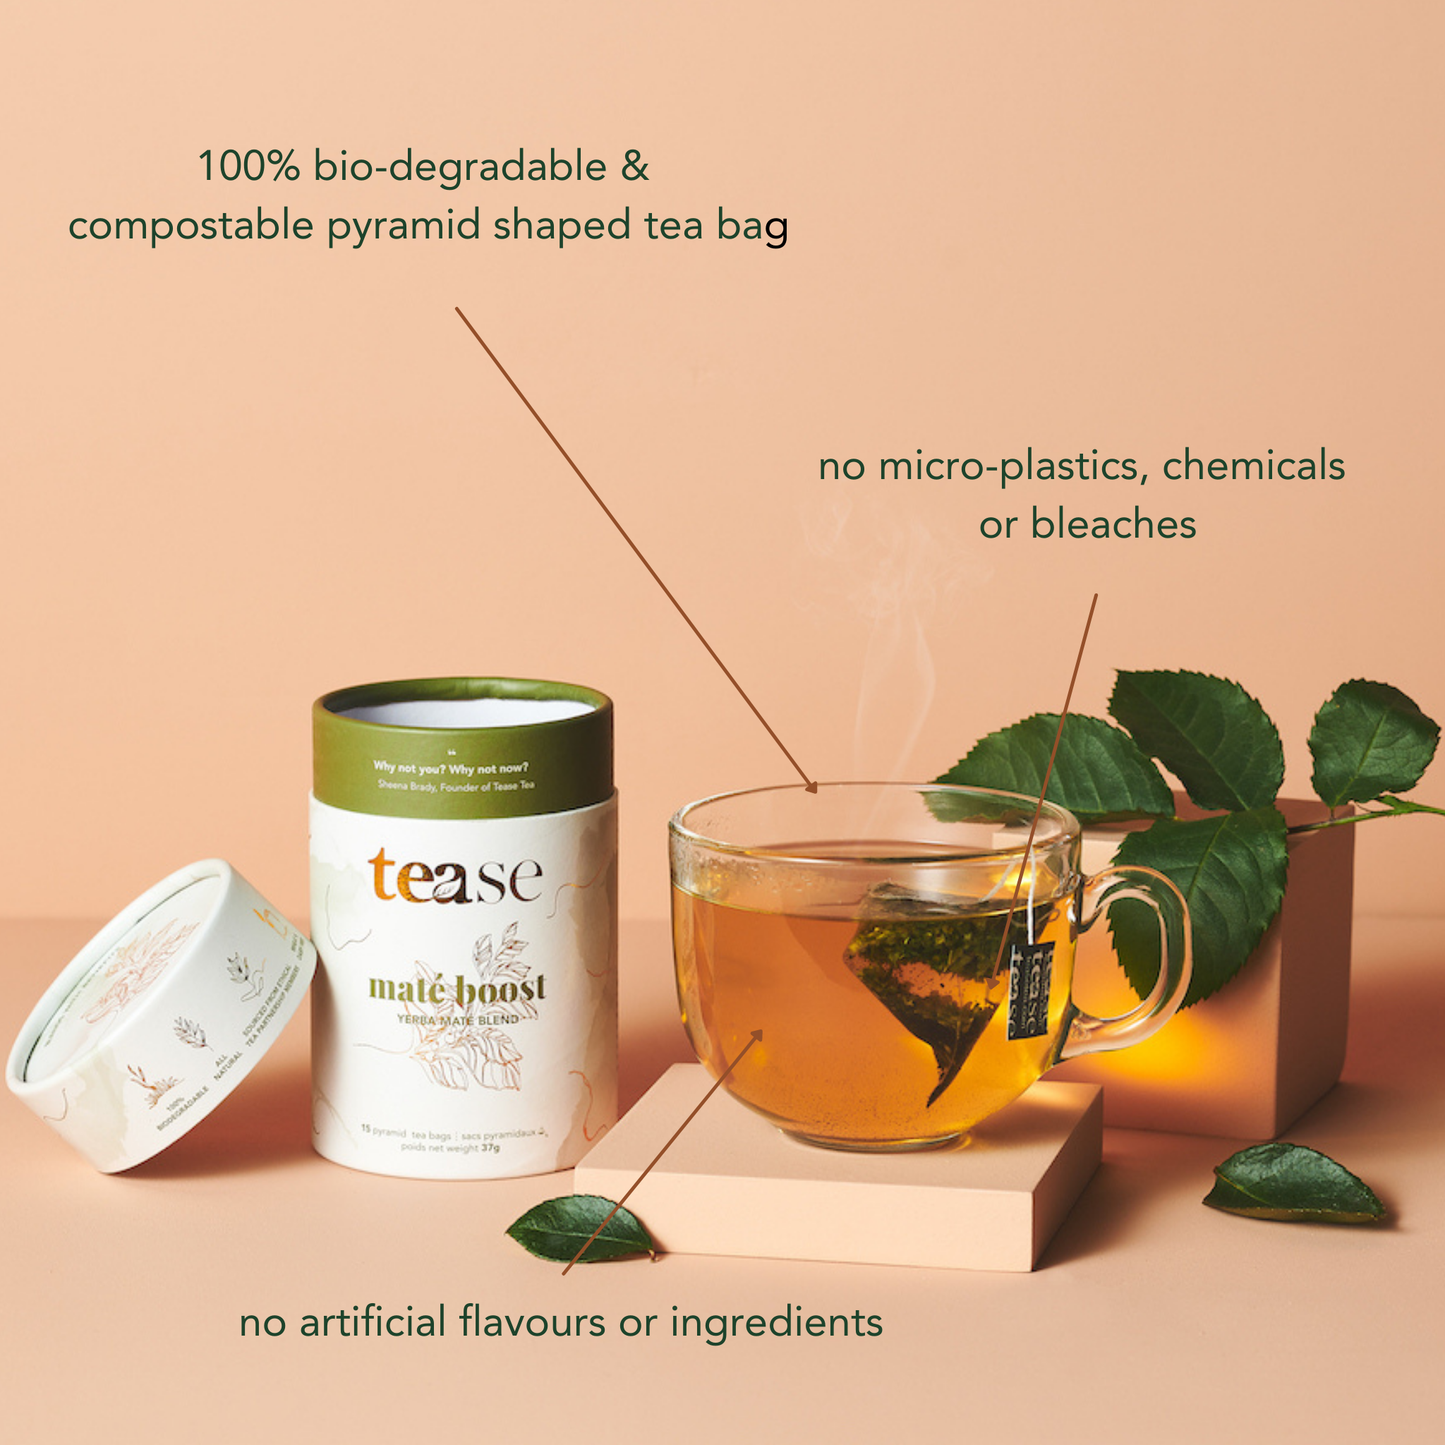 Self Care Elixir Moringa Adaptogenic Superfood Tea Blend